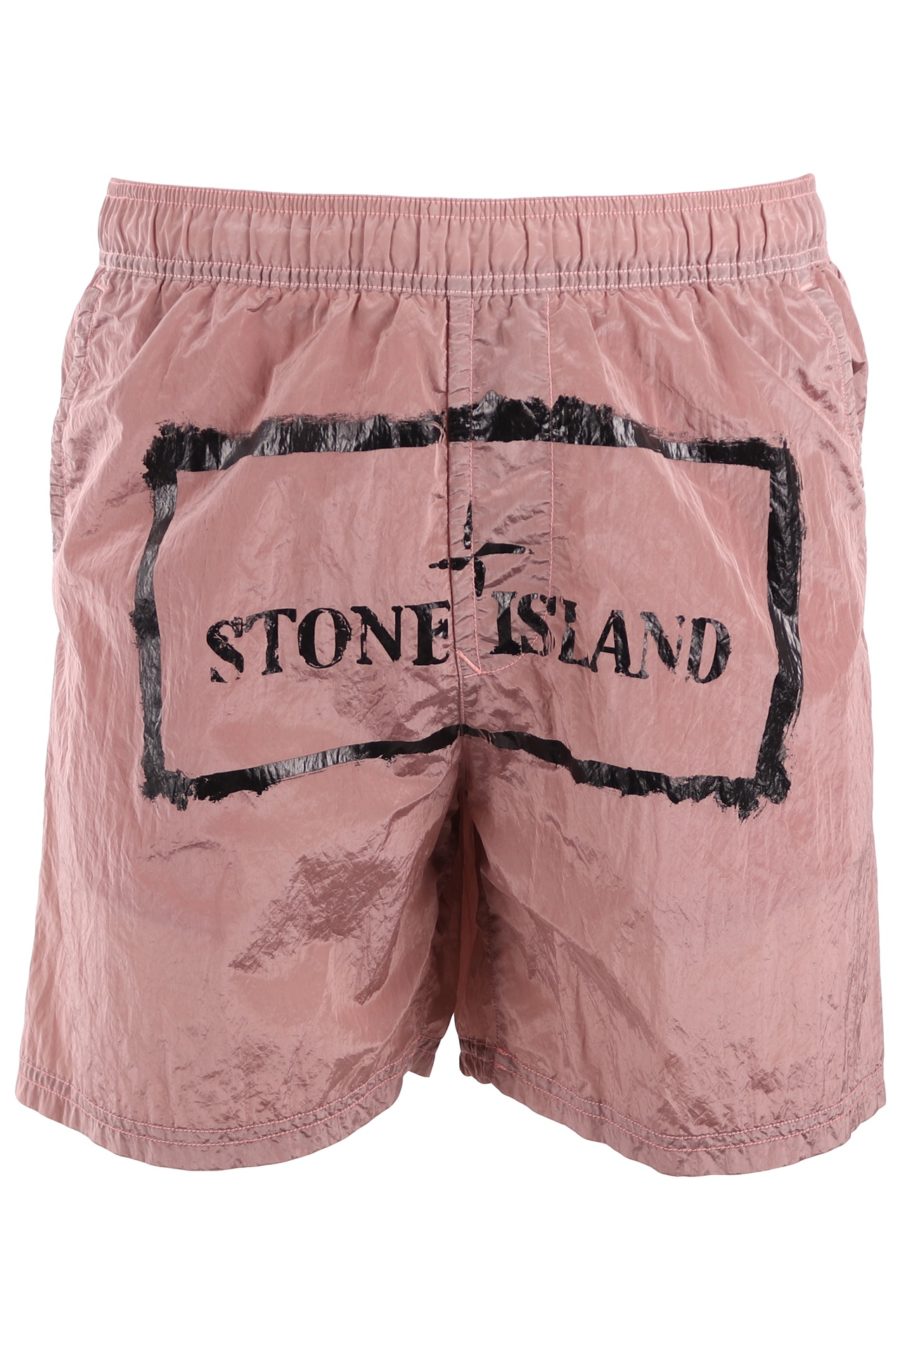 Pantalón corto Stone Island rosa perlado - 61fe736754d5f9ba25fff6b173b0e13db3ad7f63